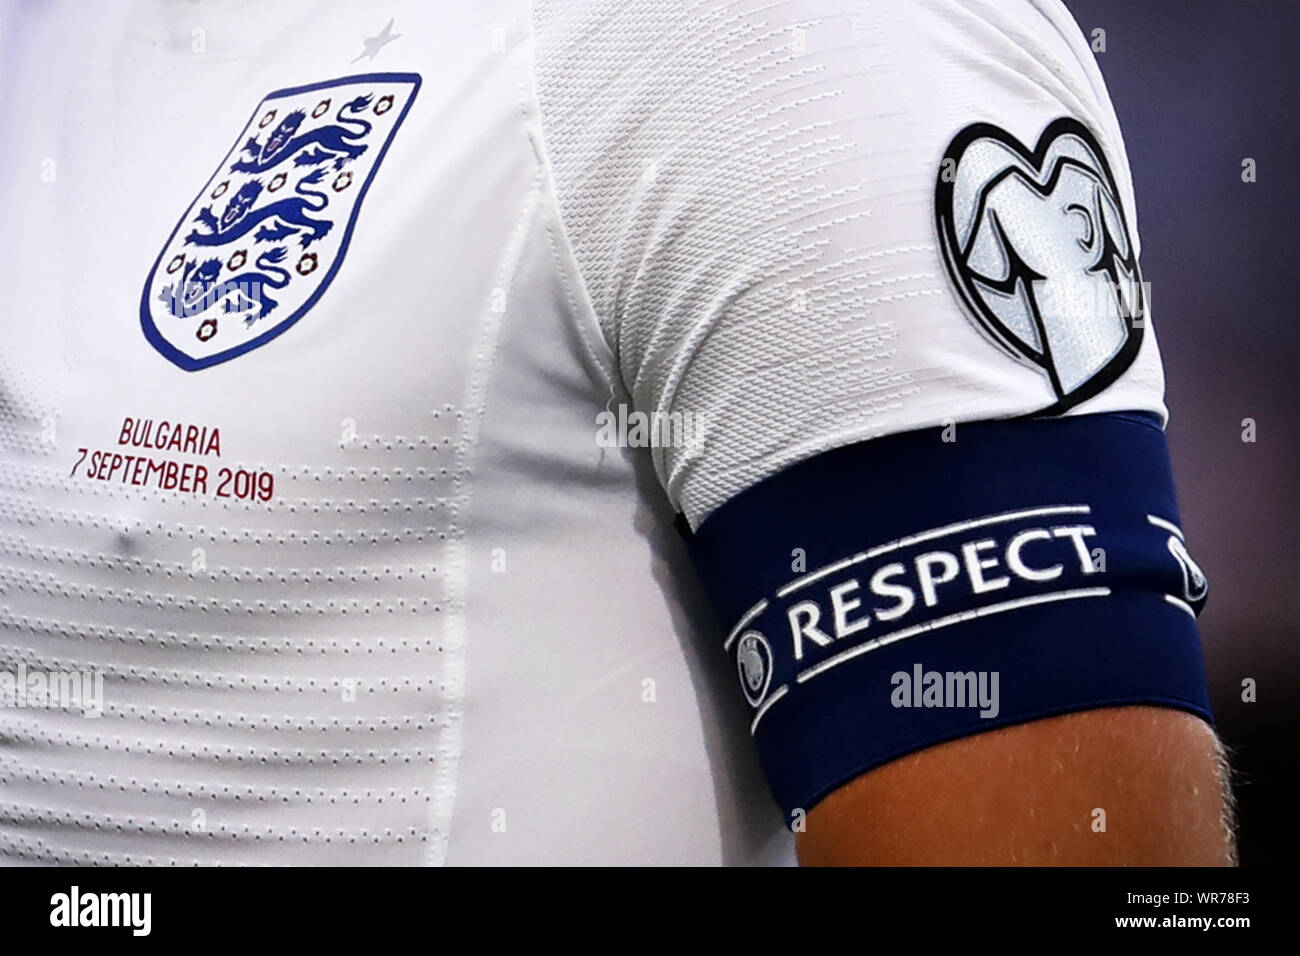 England crest, Euro 2020 branding and UEFA Respect captains armband -  England v Bulgaria, UEFA Euro 2020 Qualifier - Group A, Wembley Stadium,  London, UK - 7th September 2019 Editorial Use Only Stock Photo - Alamy